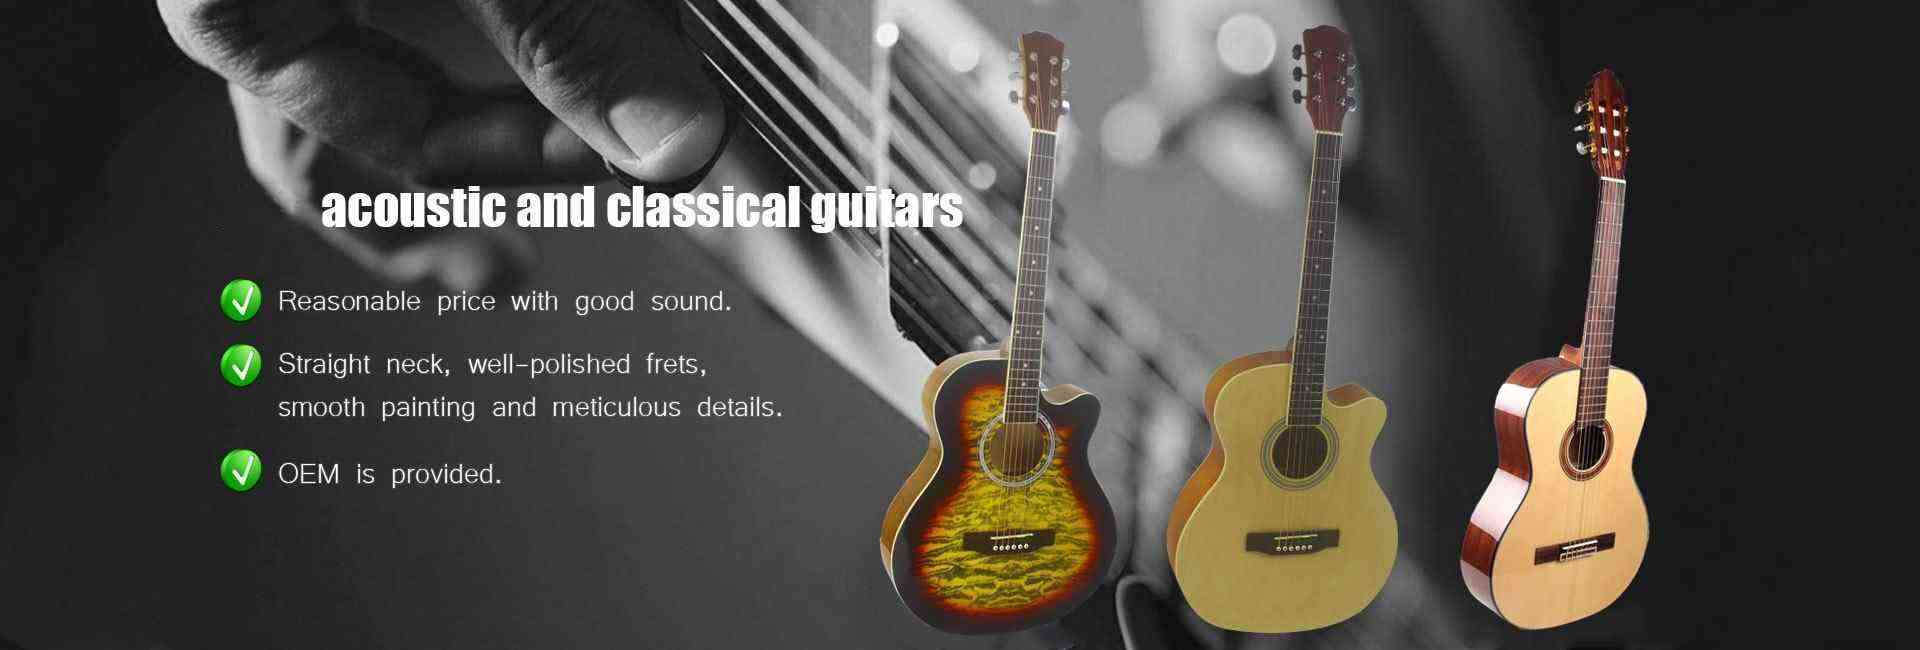 GZ HANSI’ acoustic and classical guitars